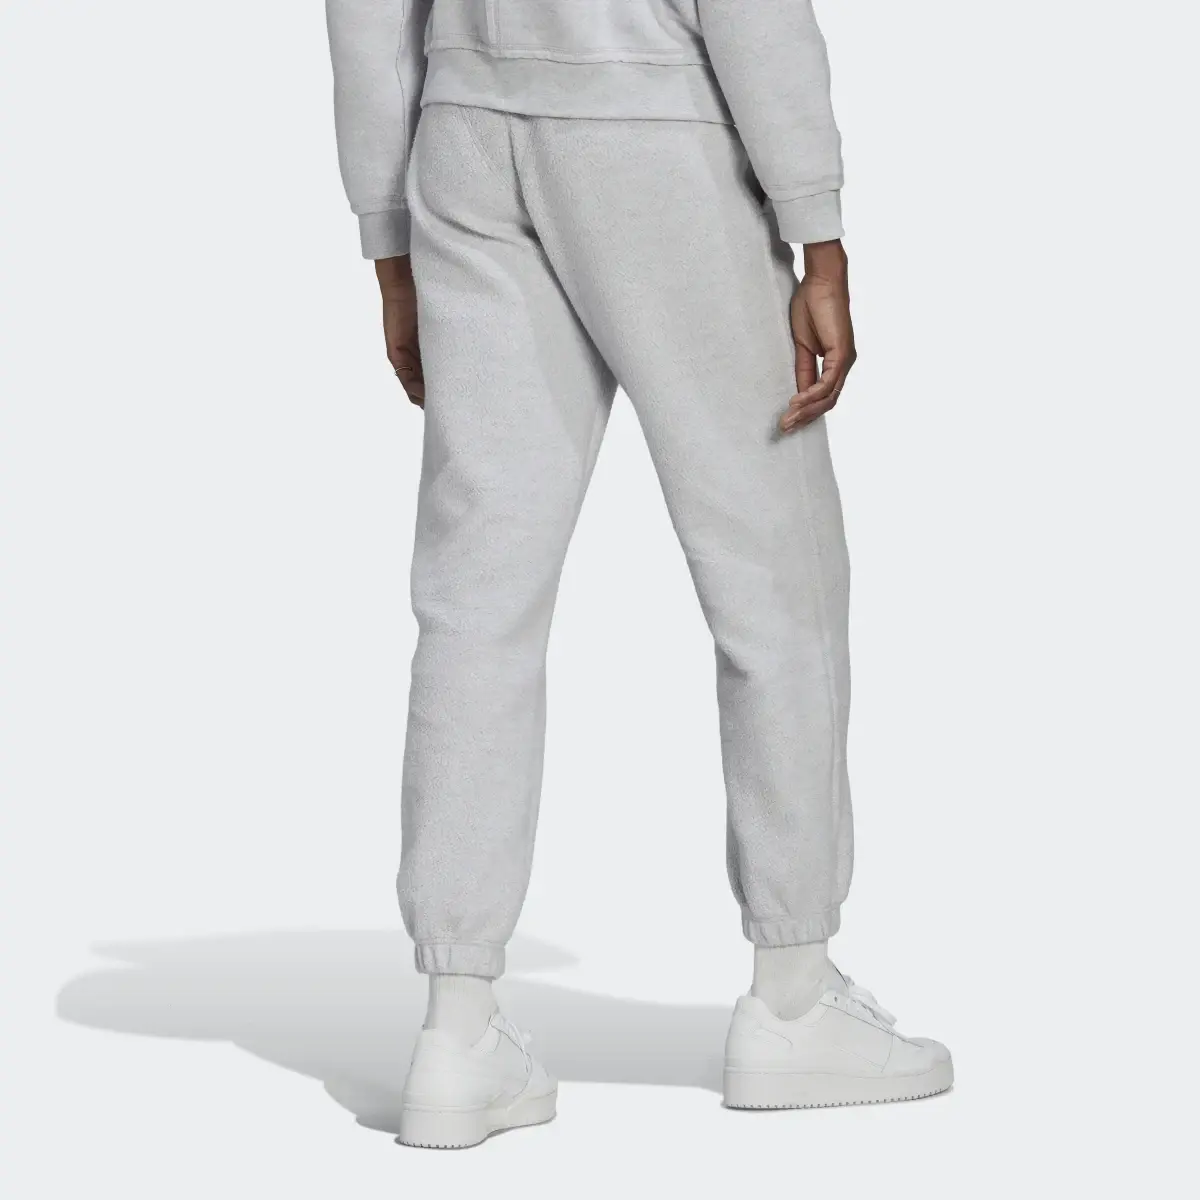 Adidas Sweat pants Loungewear. 2